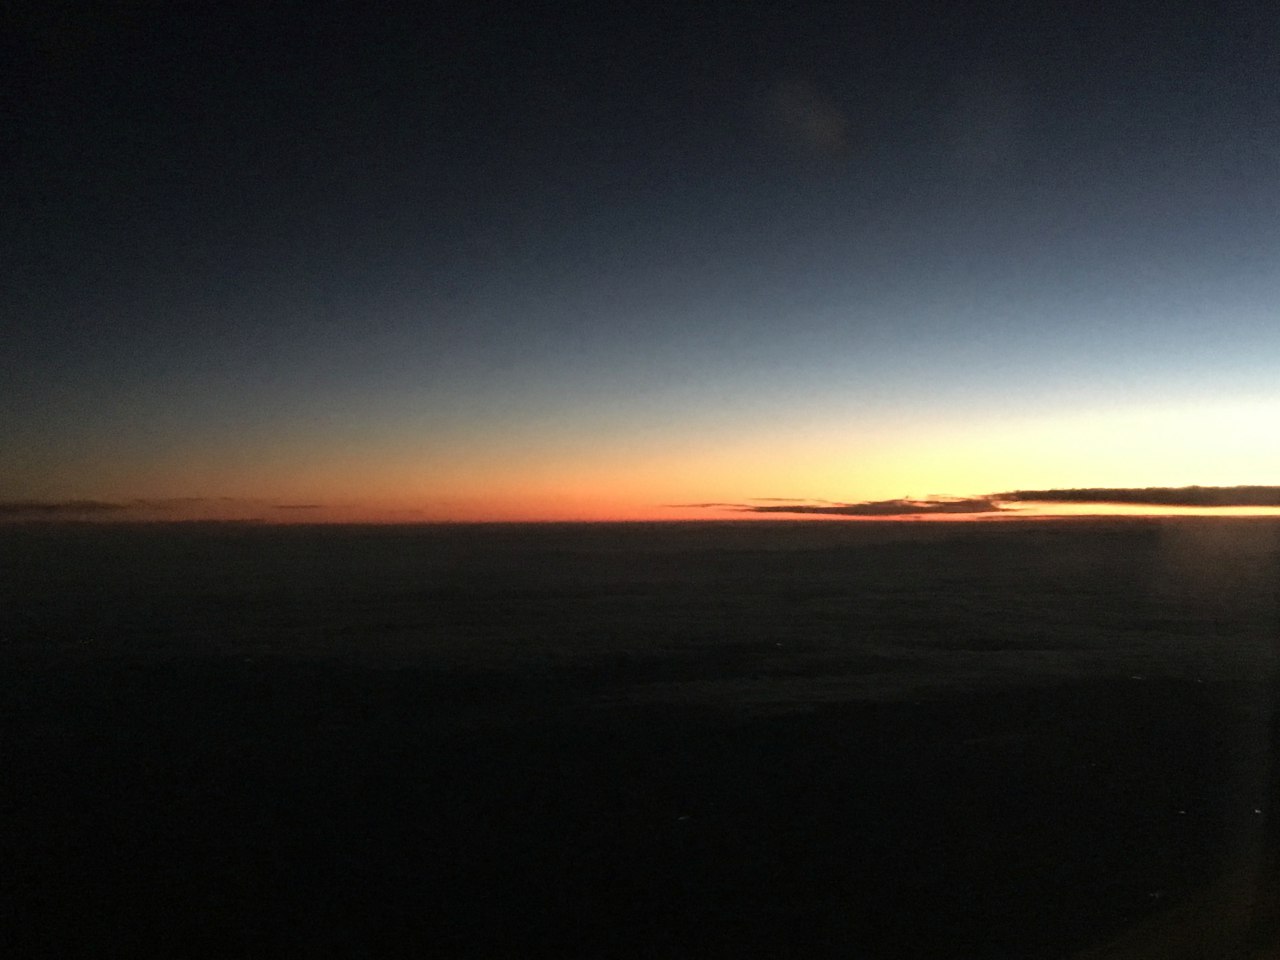 AA E175 Review-Sunset Leaving Houston IAH